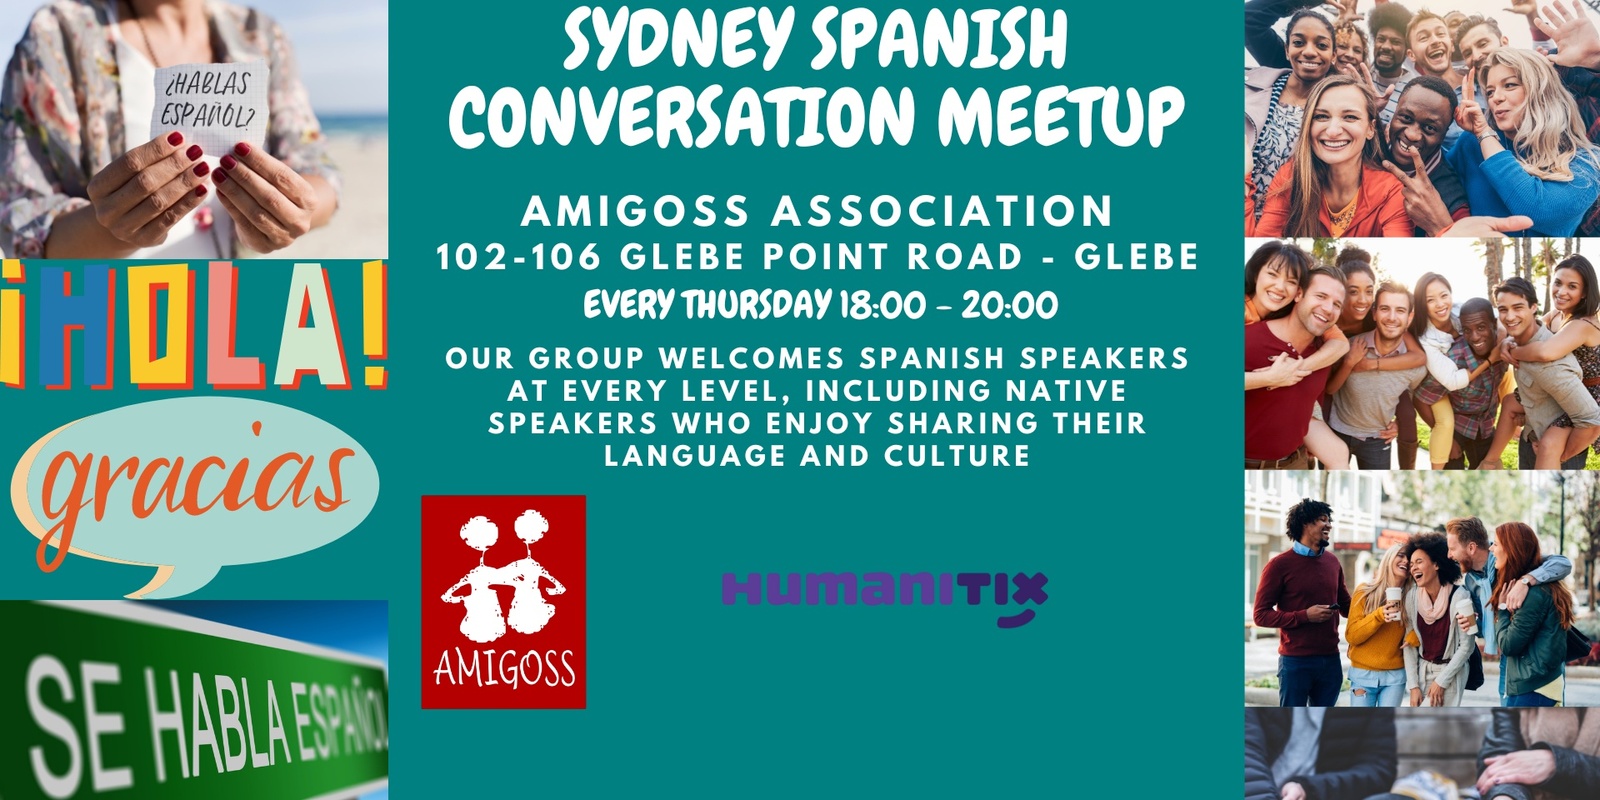 Banner image for SYDNEY SPANISH CONVERSATION MEETUP